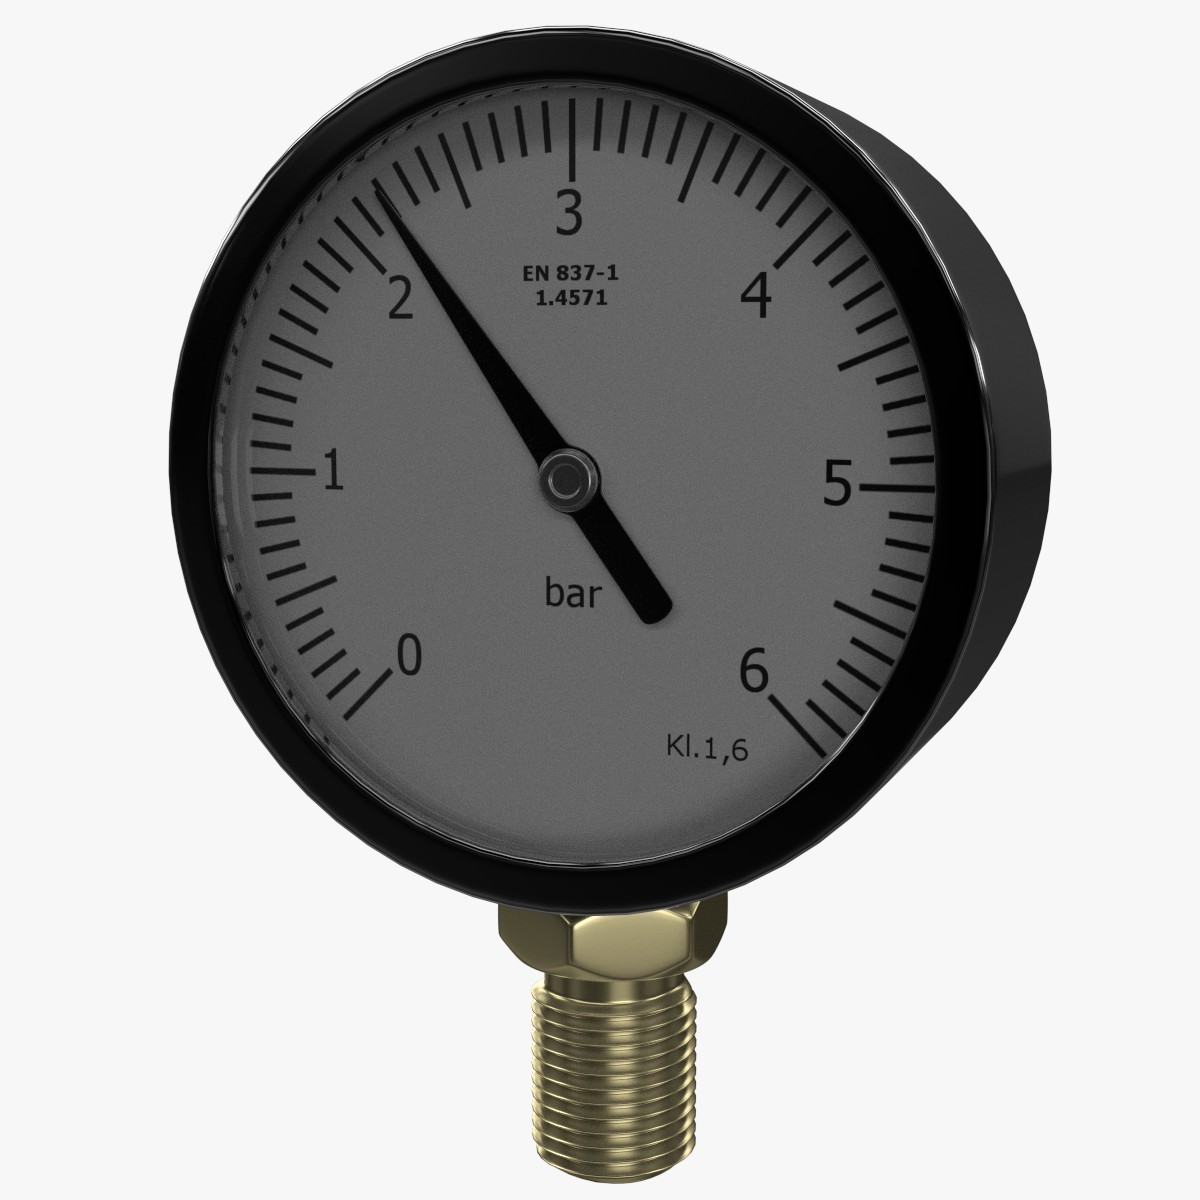 Measuring steam pressure фото 22